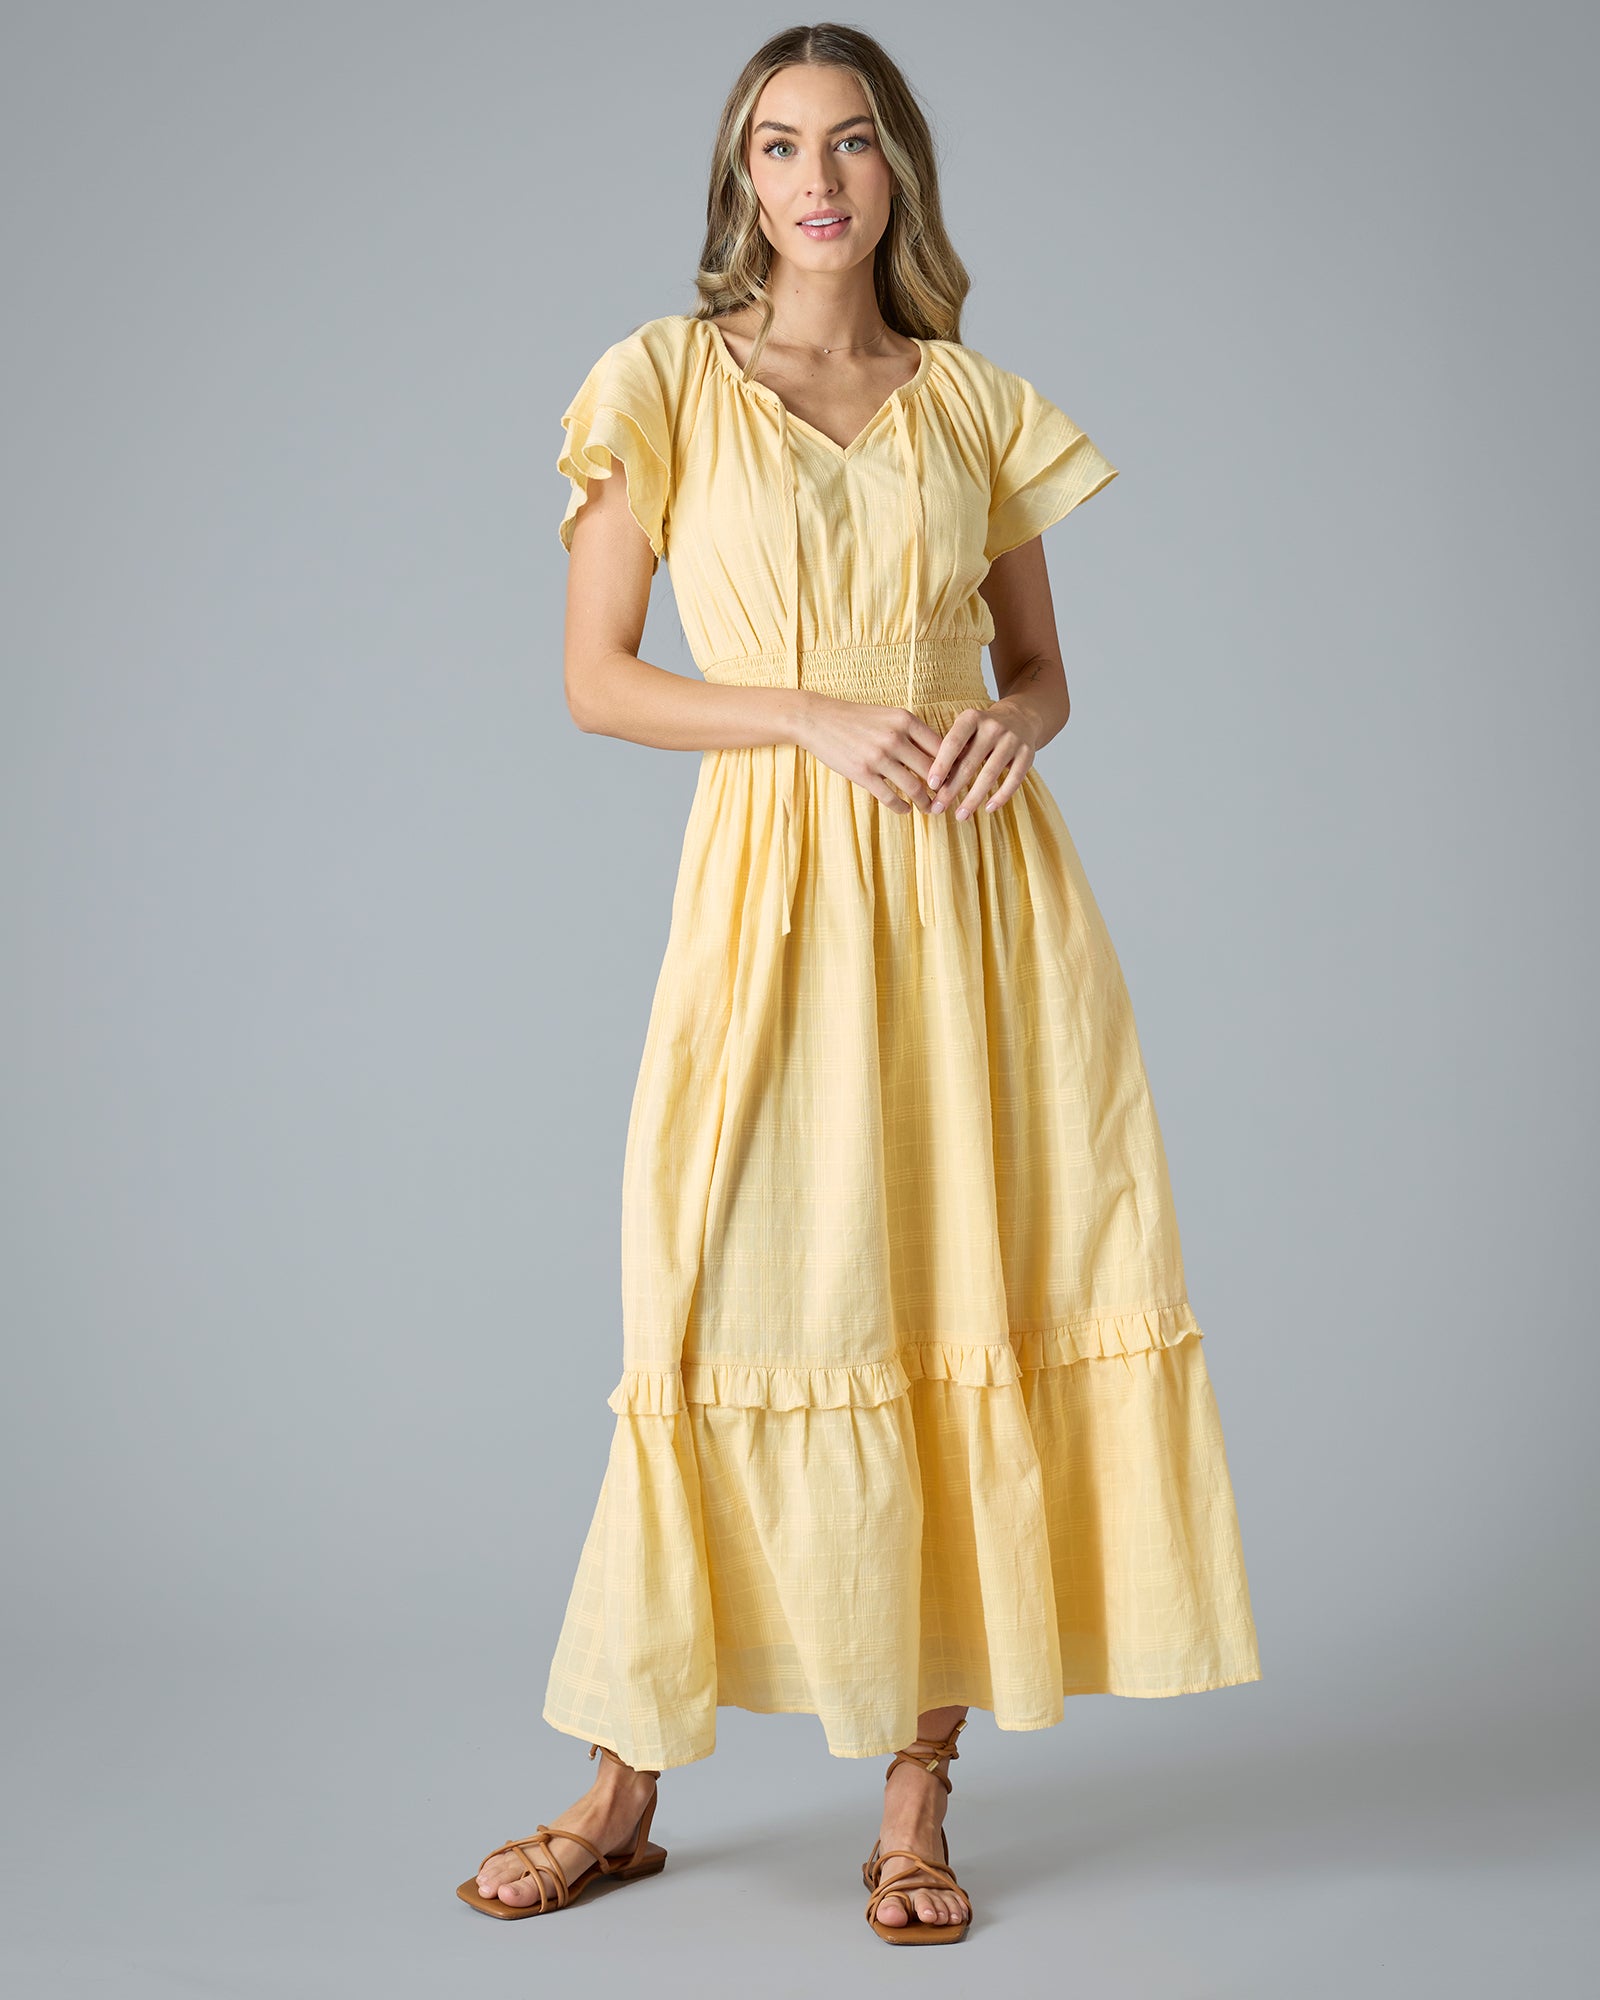 Woman in a yellow short sleeve, maxi length dress